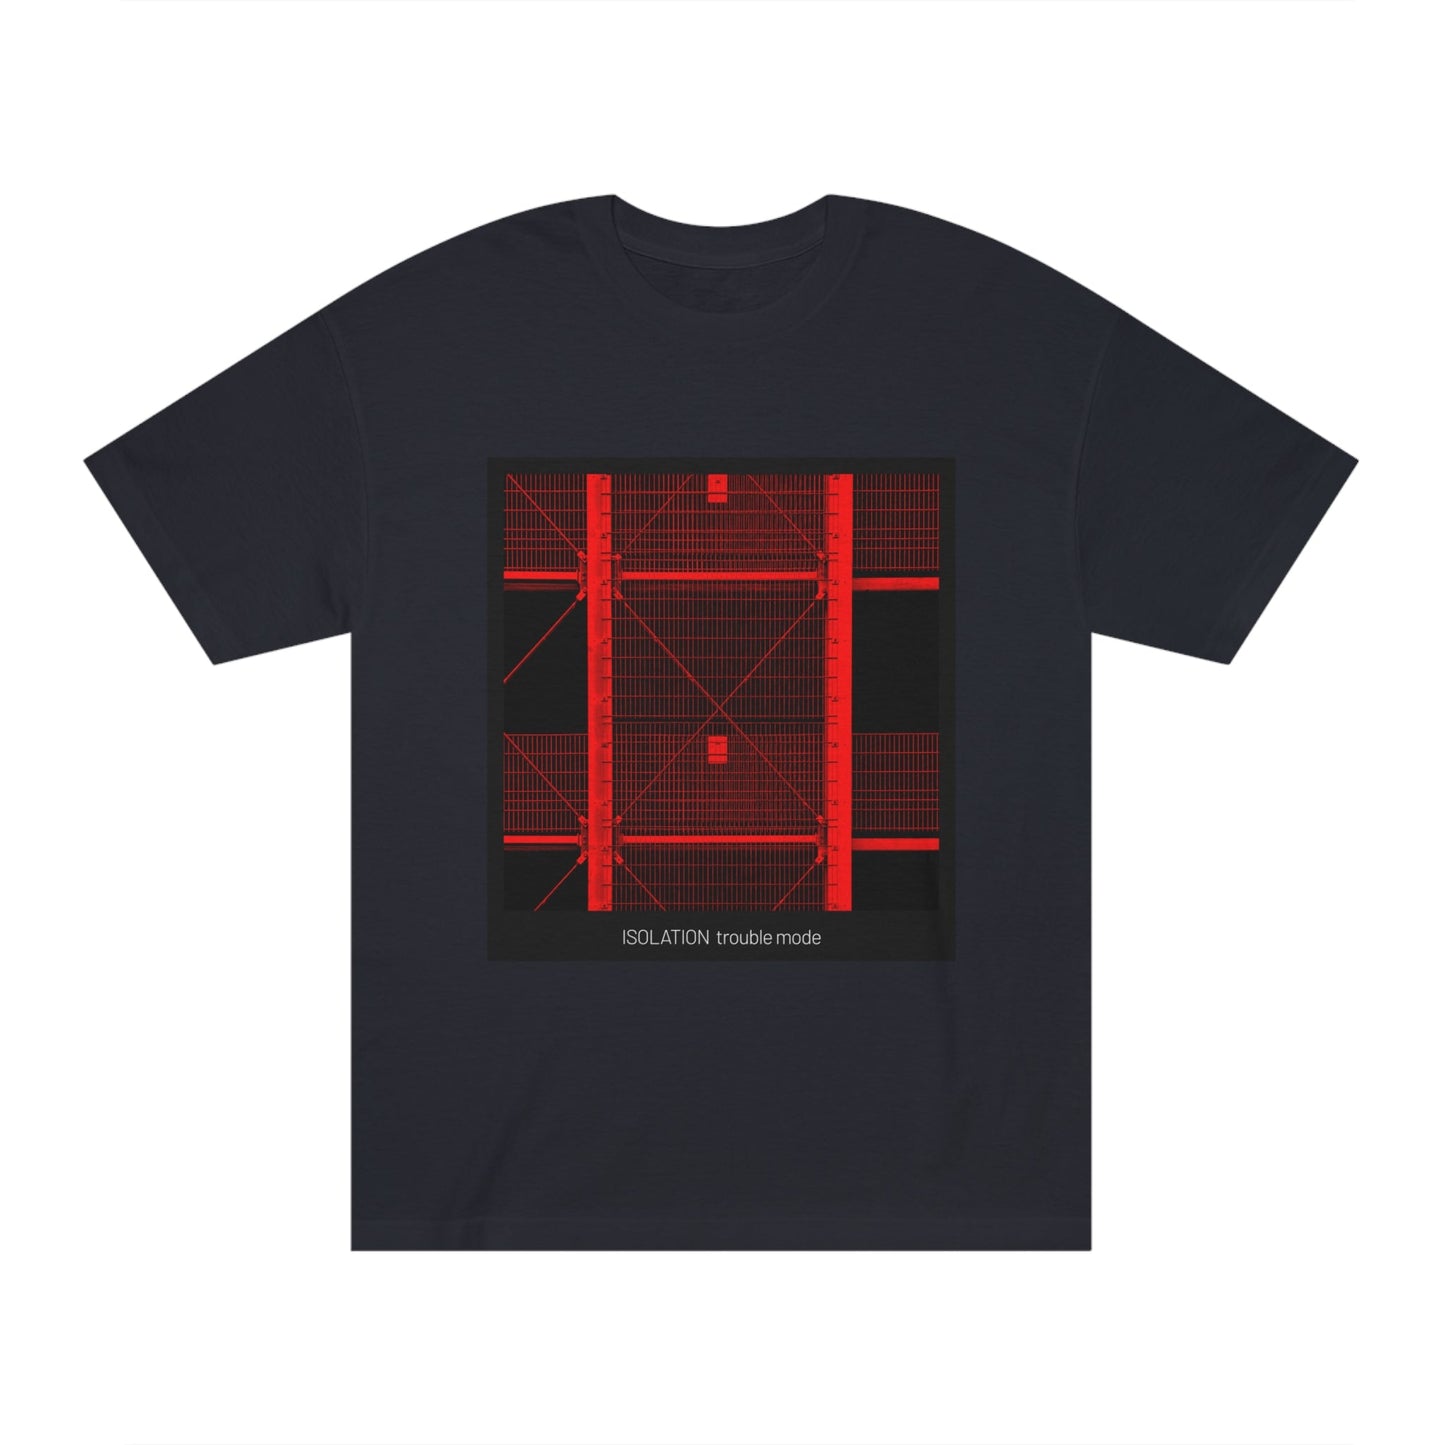 ISOLATION trouble mode - Playlist T'Shirt. - Pure Neo Shop